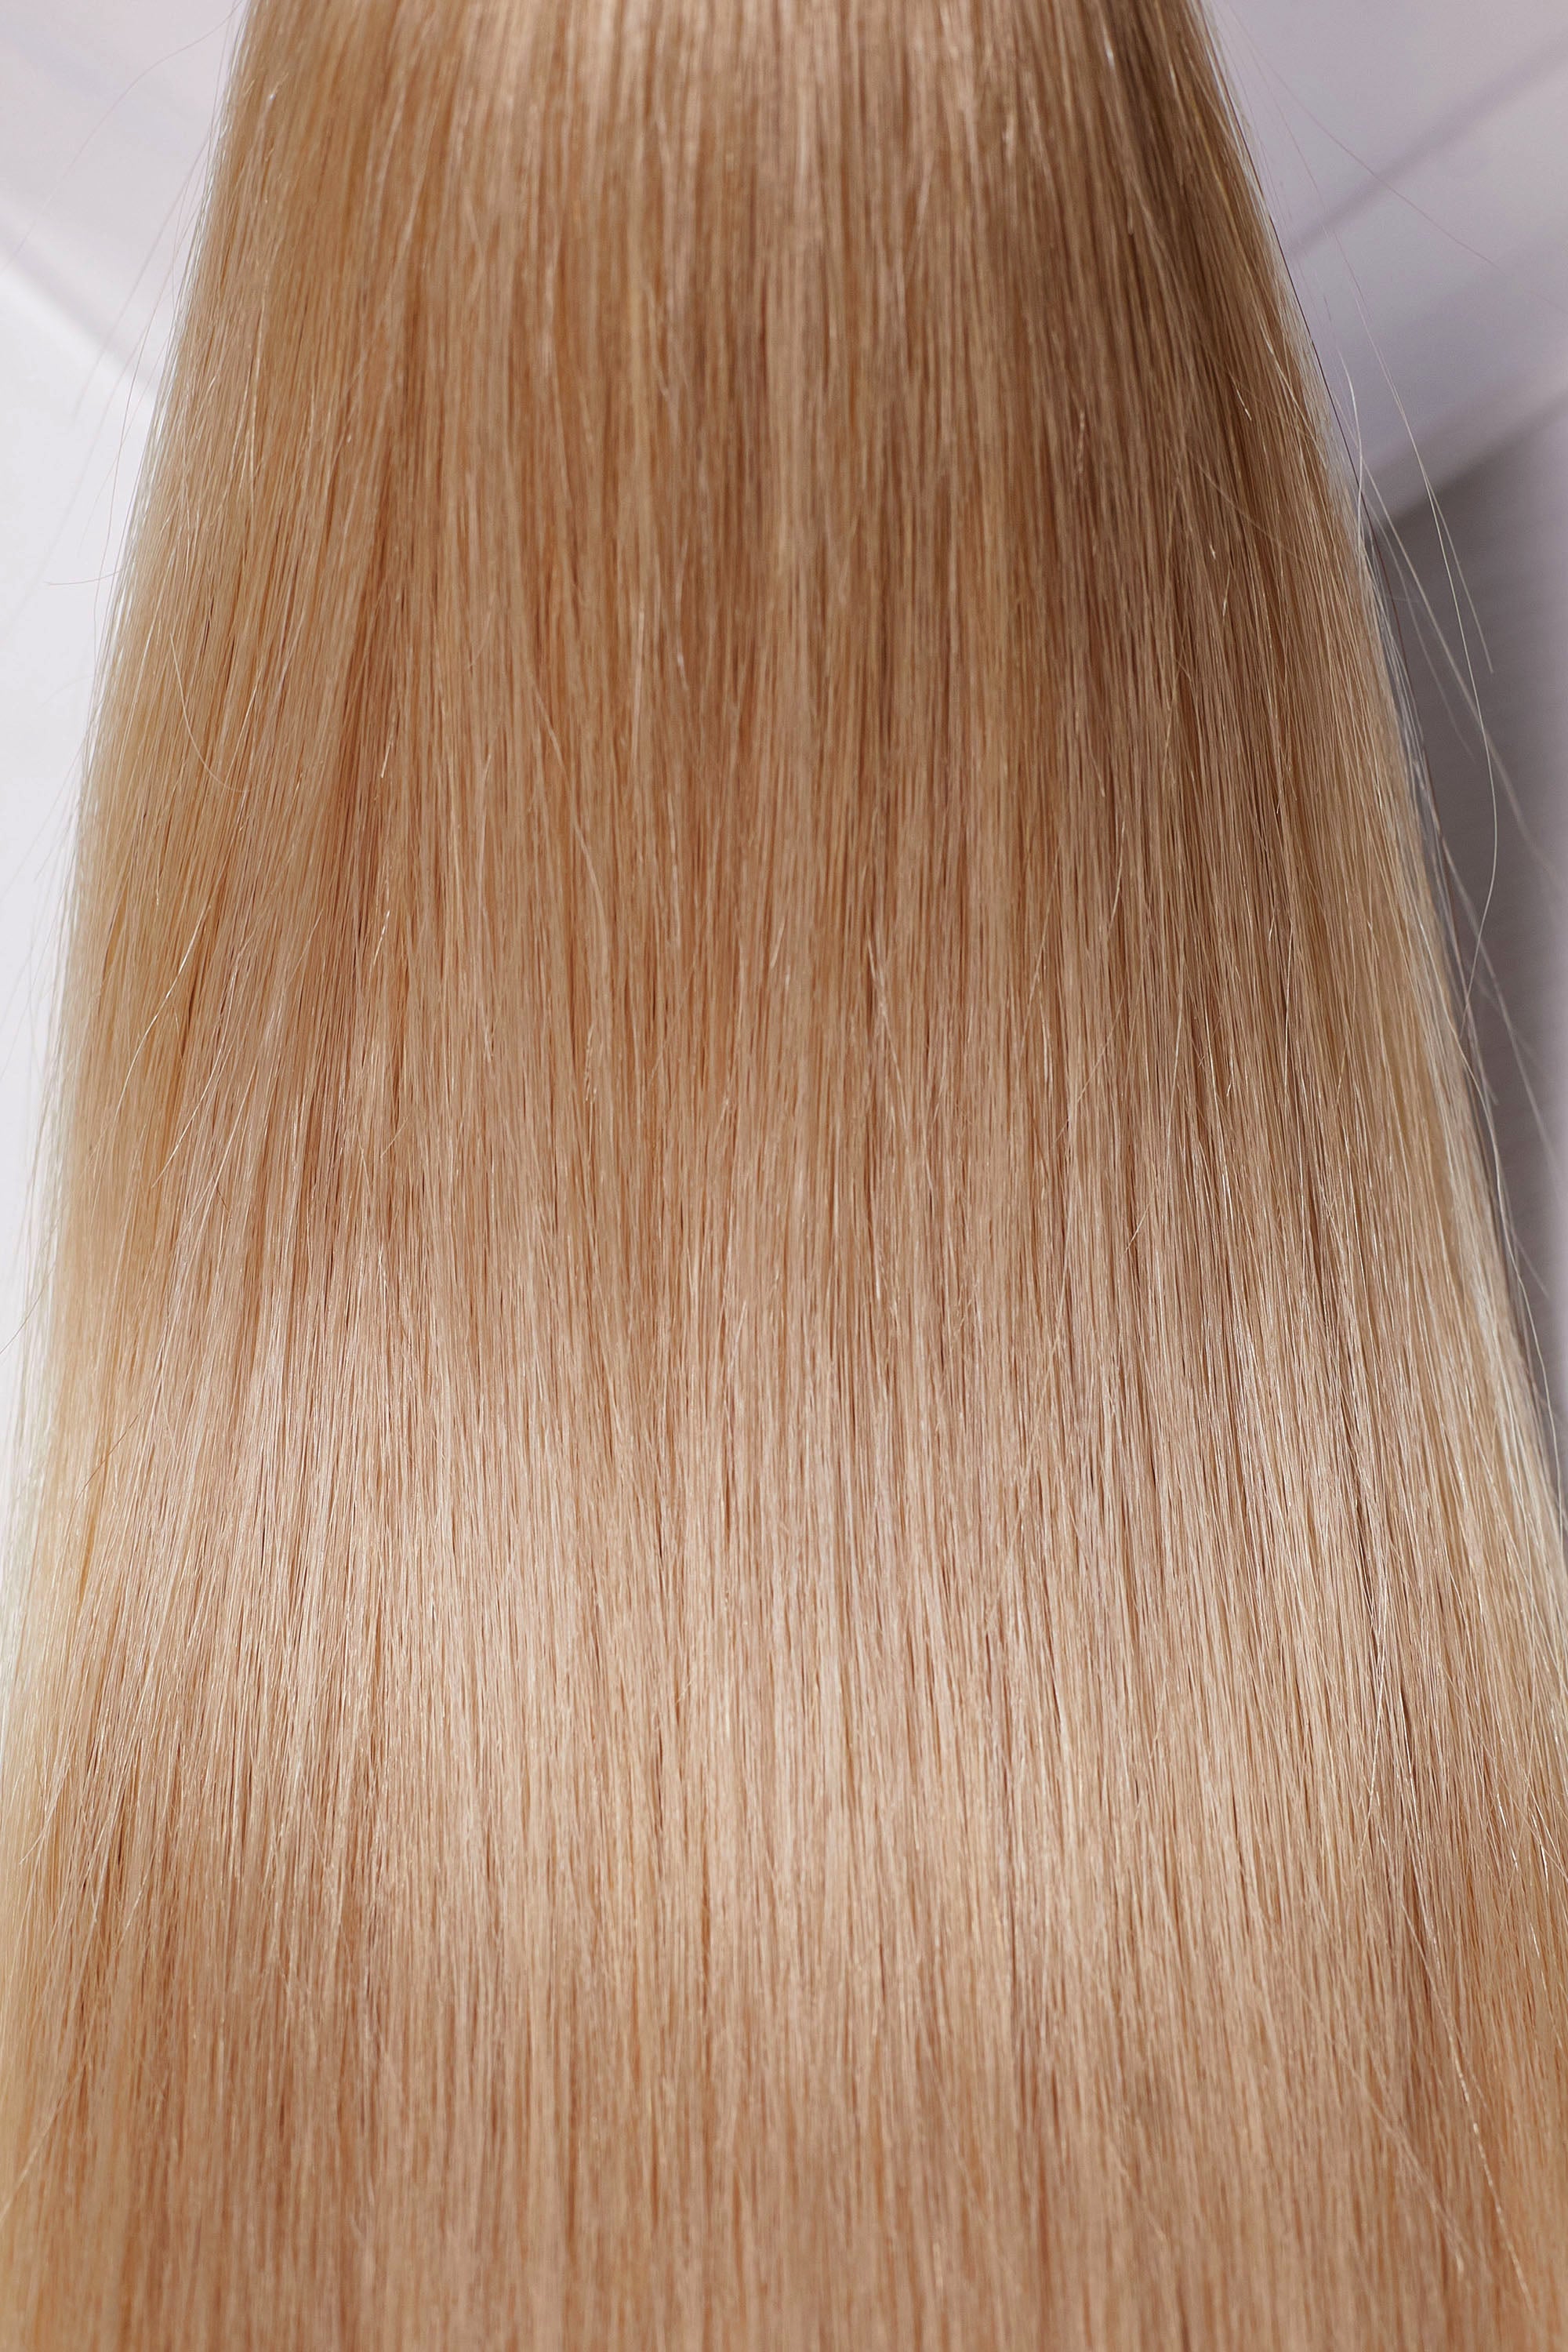 Behair professional Keratin Tip "Premium" 16" (40cm) Natural Straight Light Gold Sand #16 - 25g (1g each pcs) hair extensions